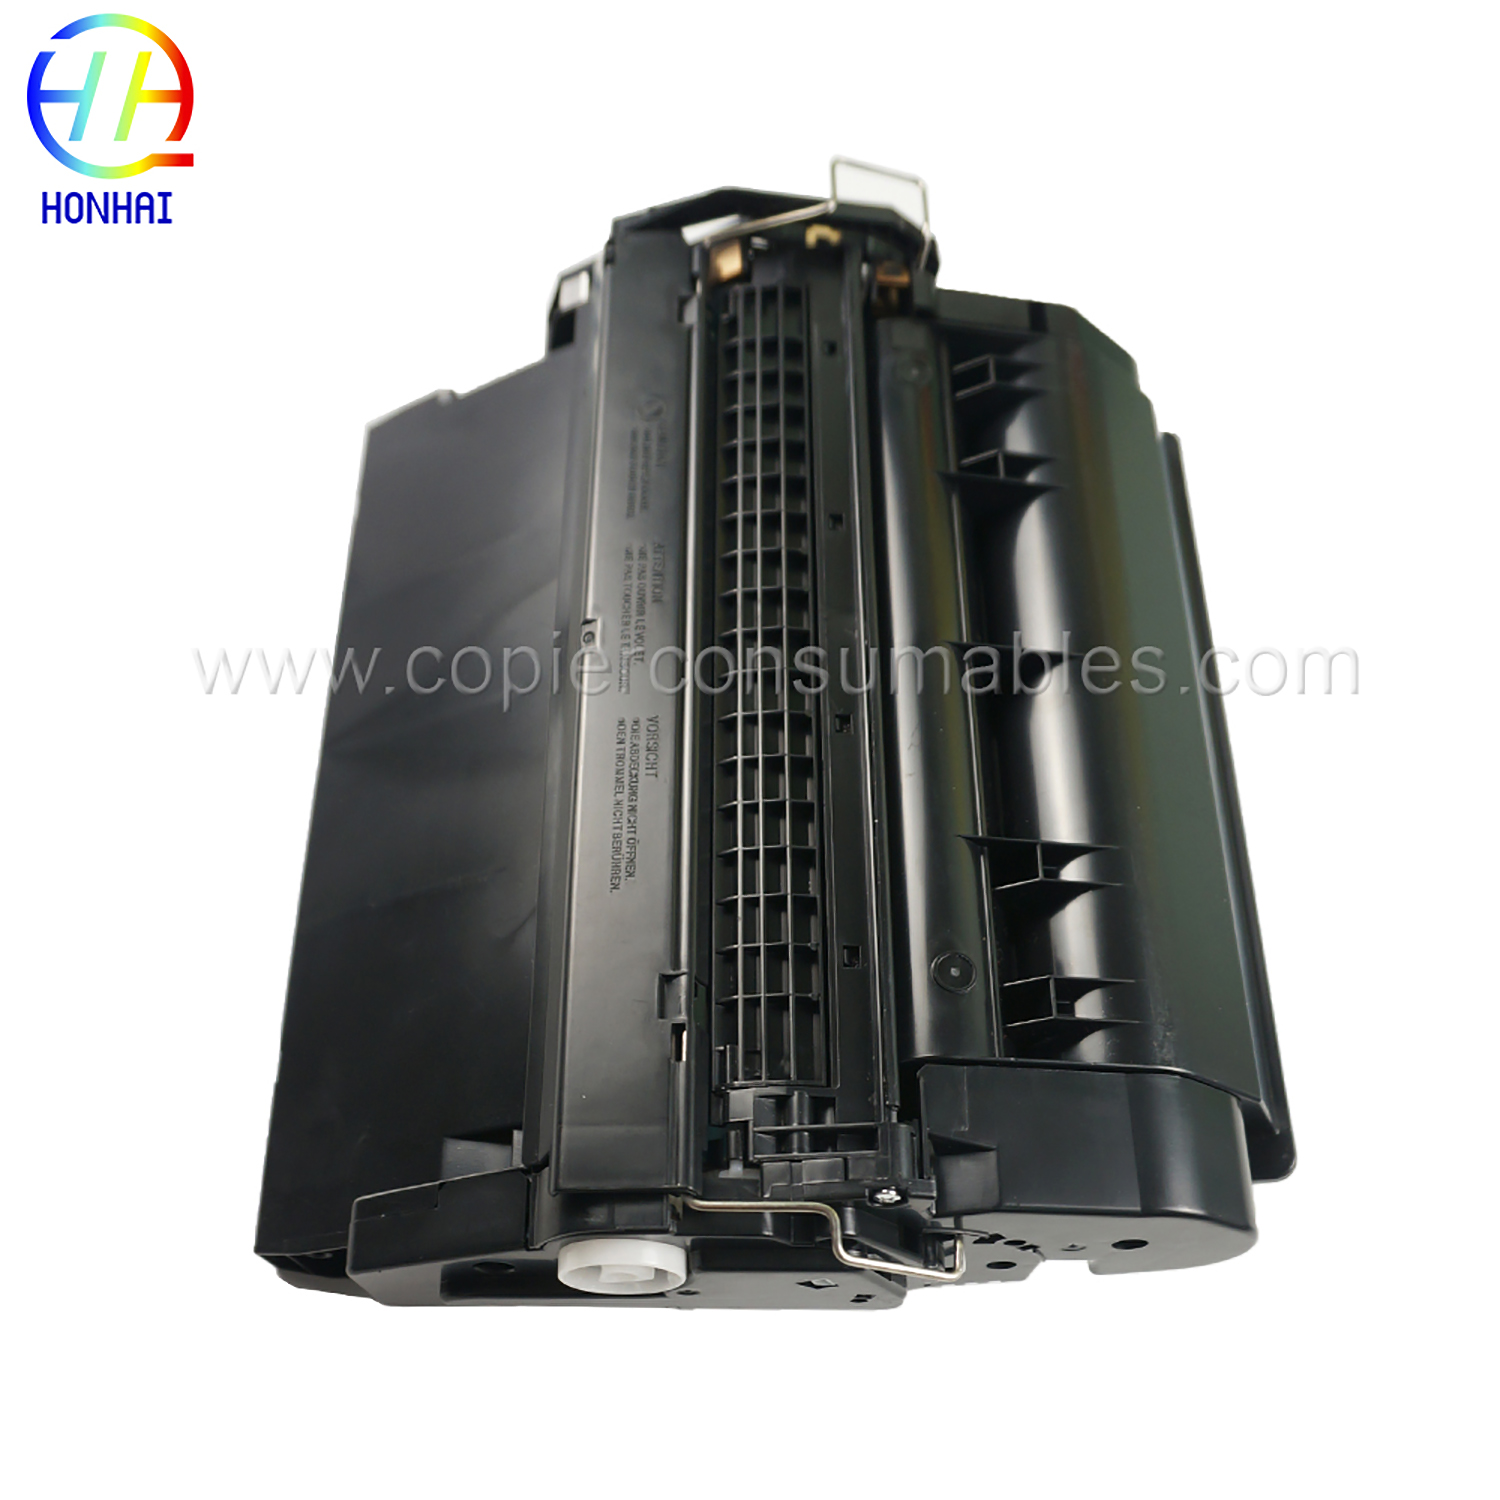 Toner Cartridge for HP LaserJet 4240n, 4250, 4350 Q5942A 42A (6) 拷贝